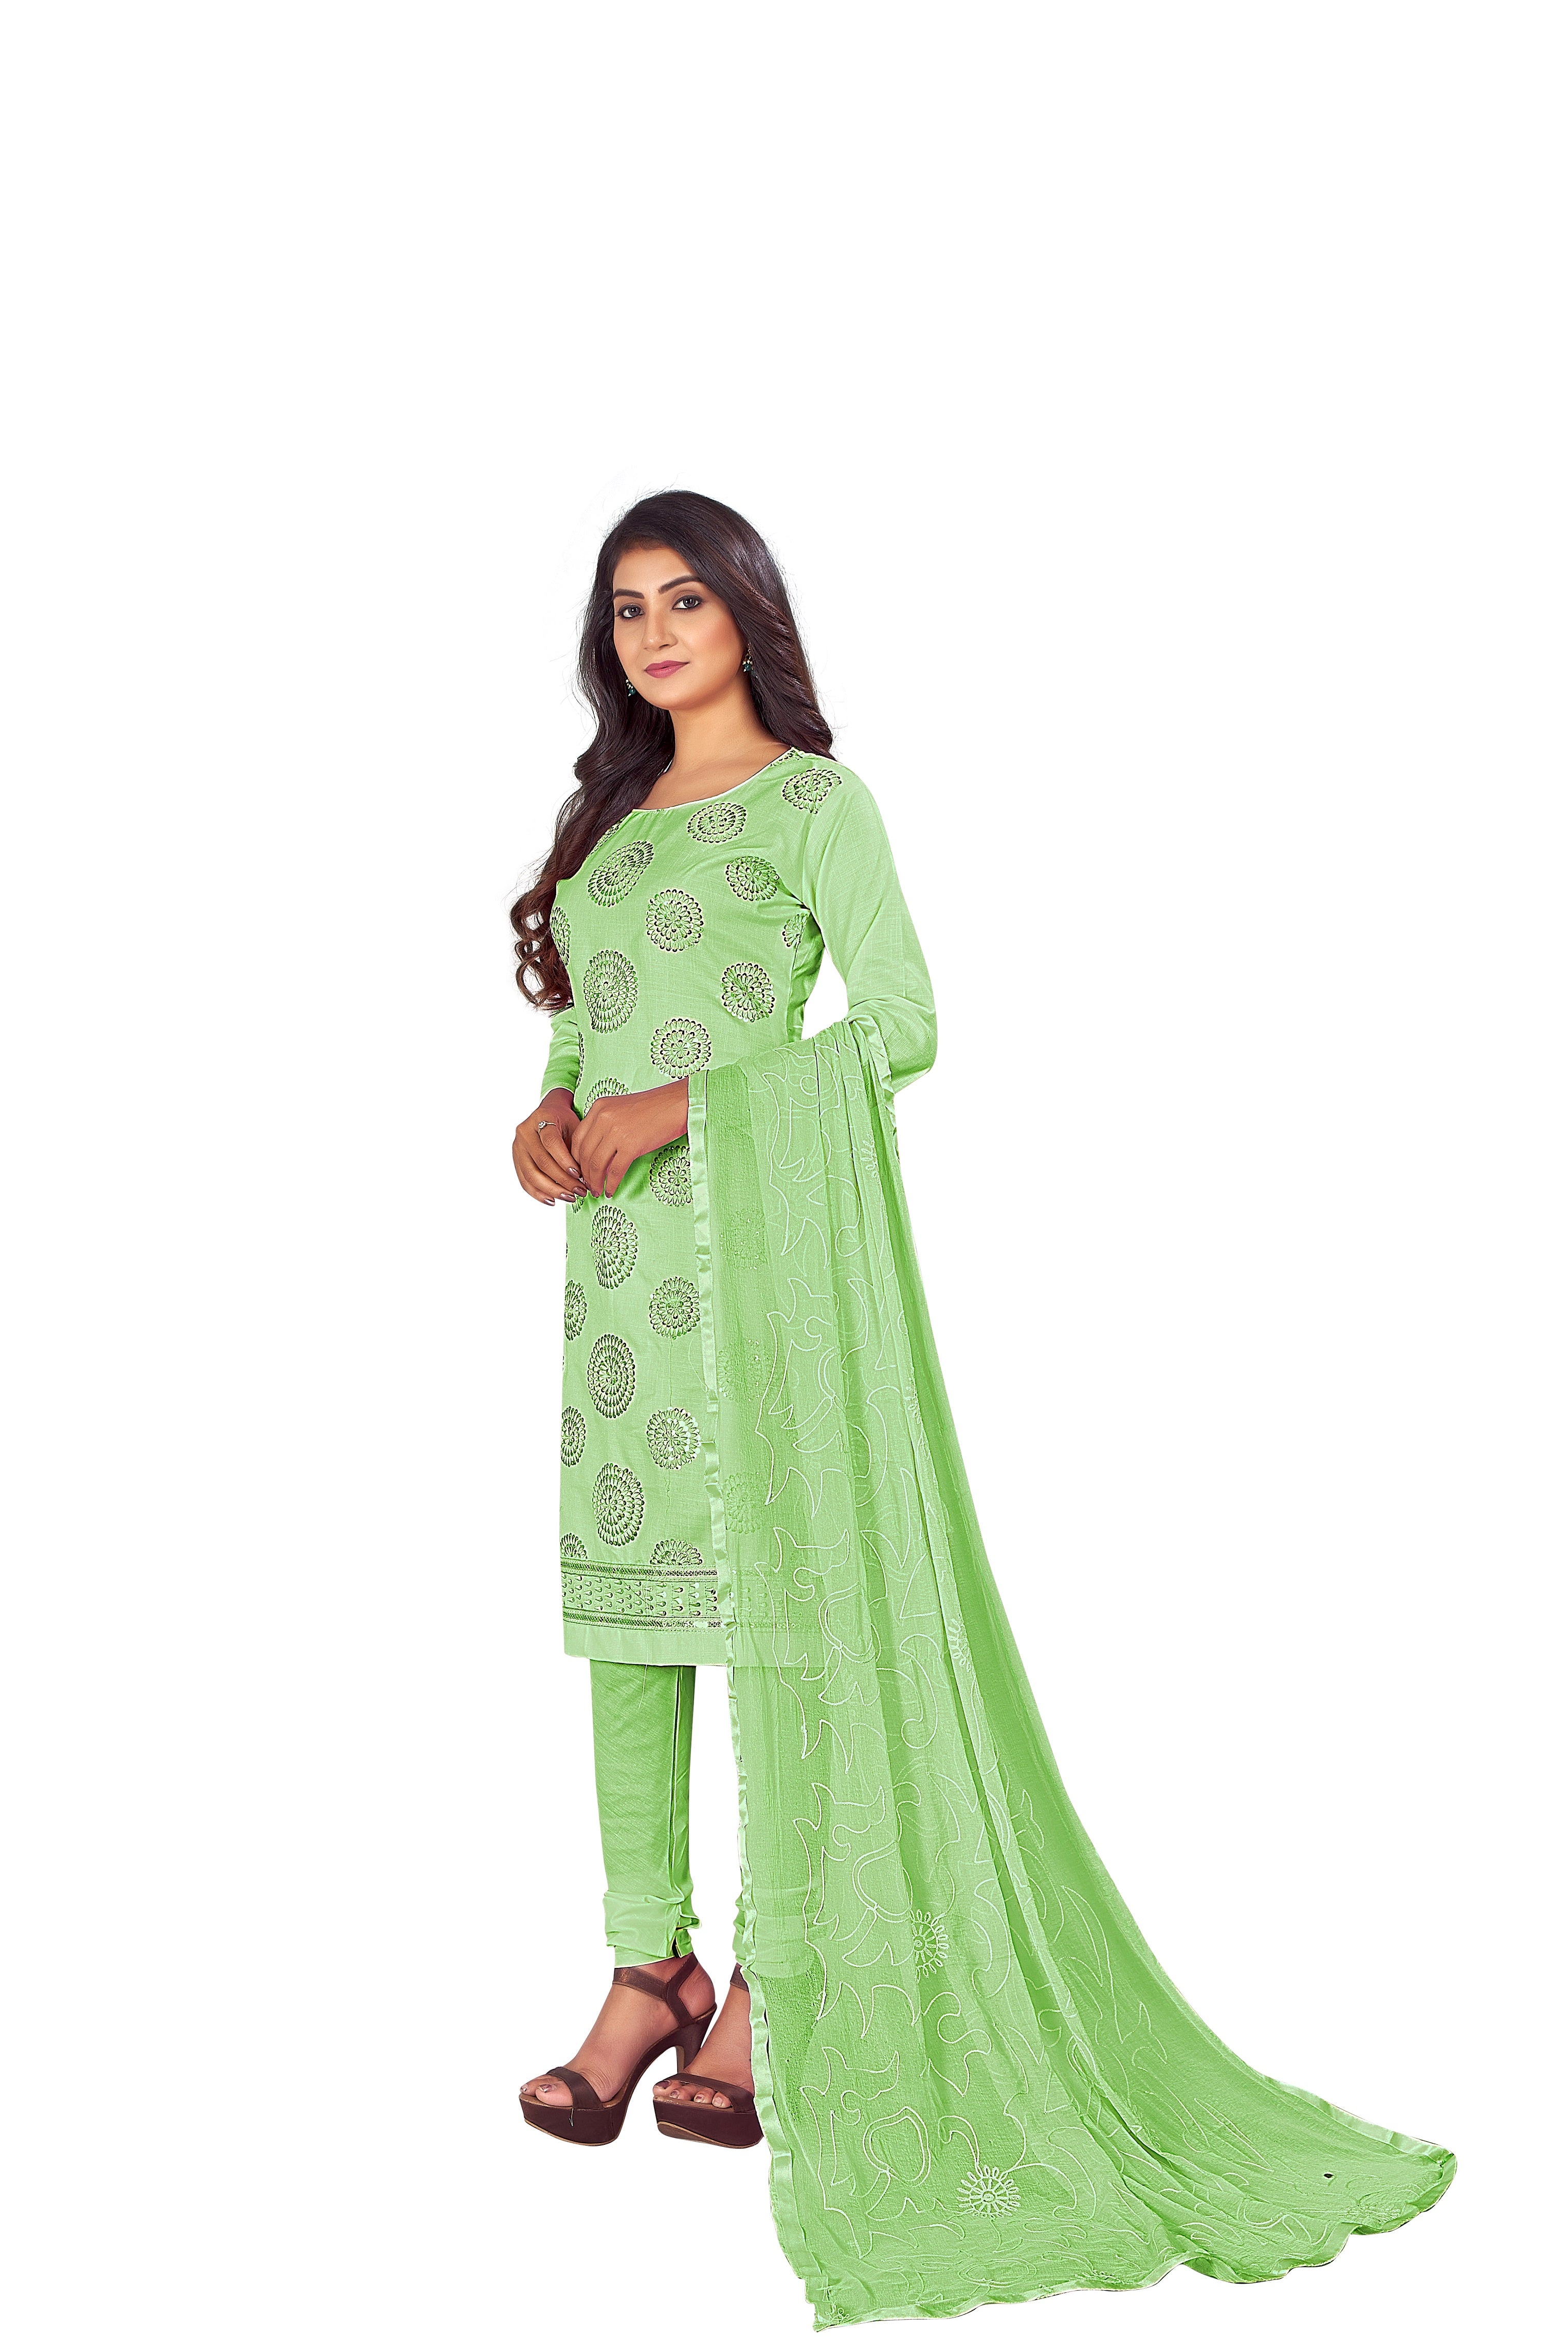 Women's Light Green Colour Semi-Stitched Suit Sets - Dwija Fashion